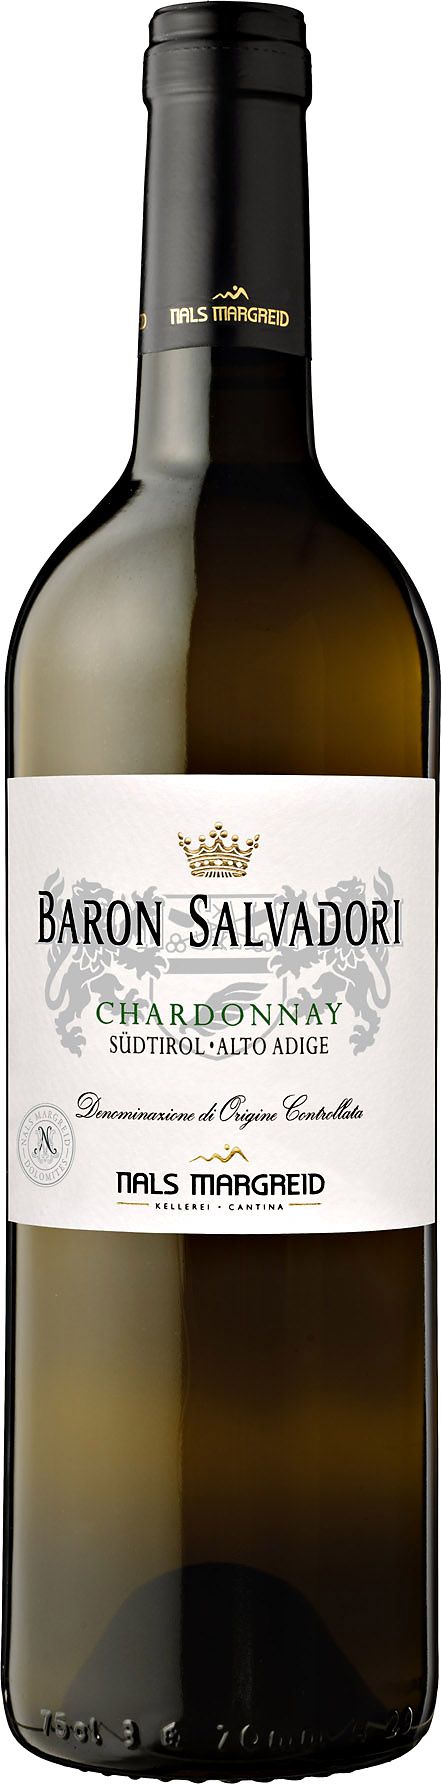 Nals Margreid, Baron Salvadori Chardonnay, 2013